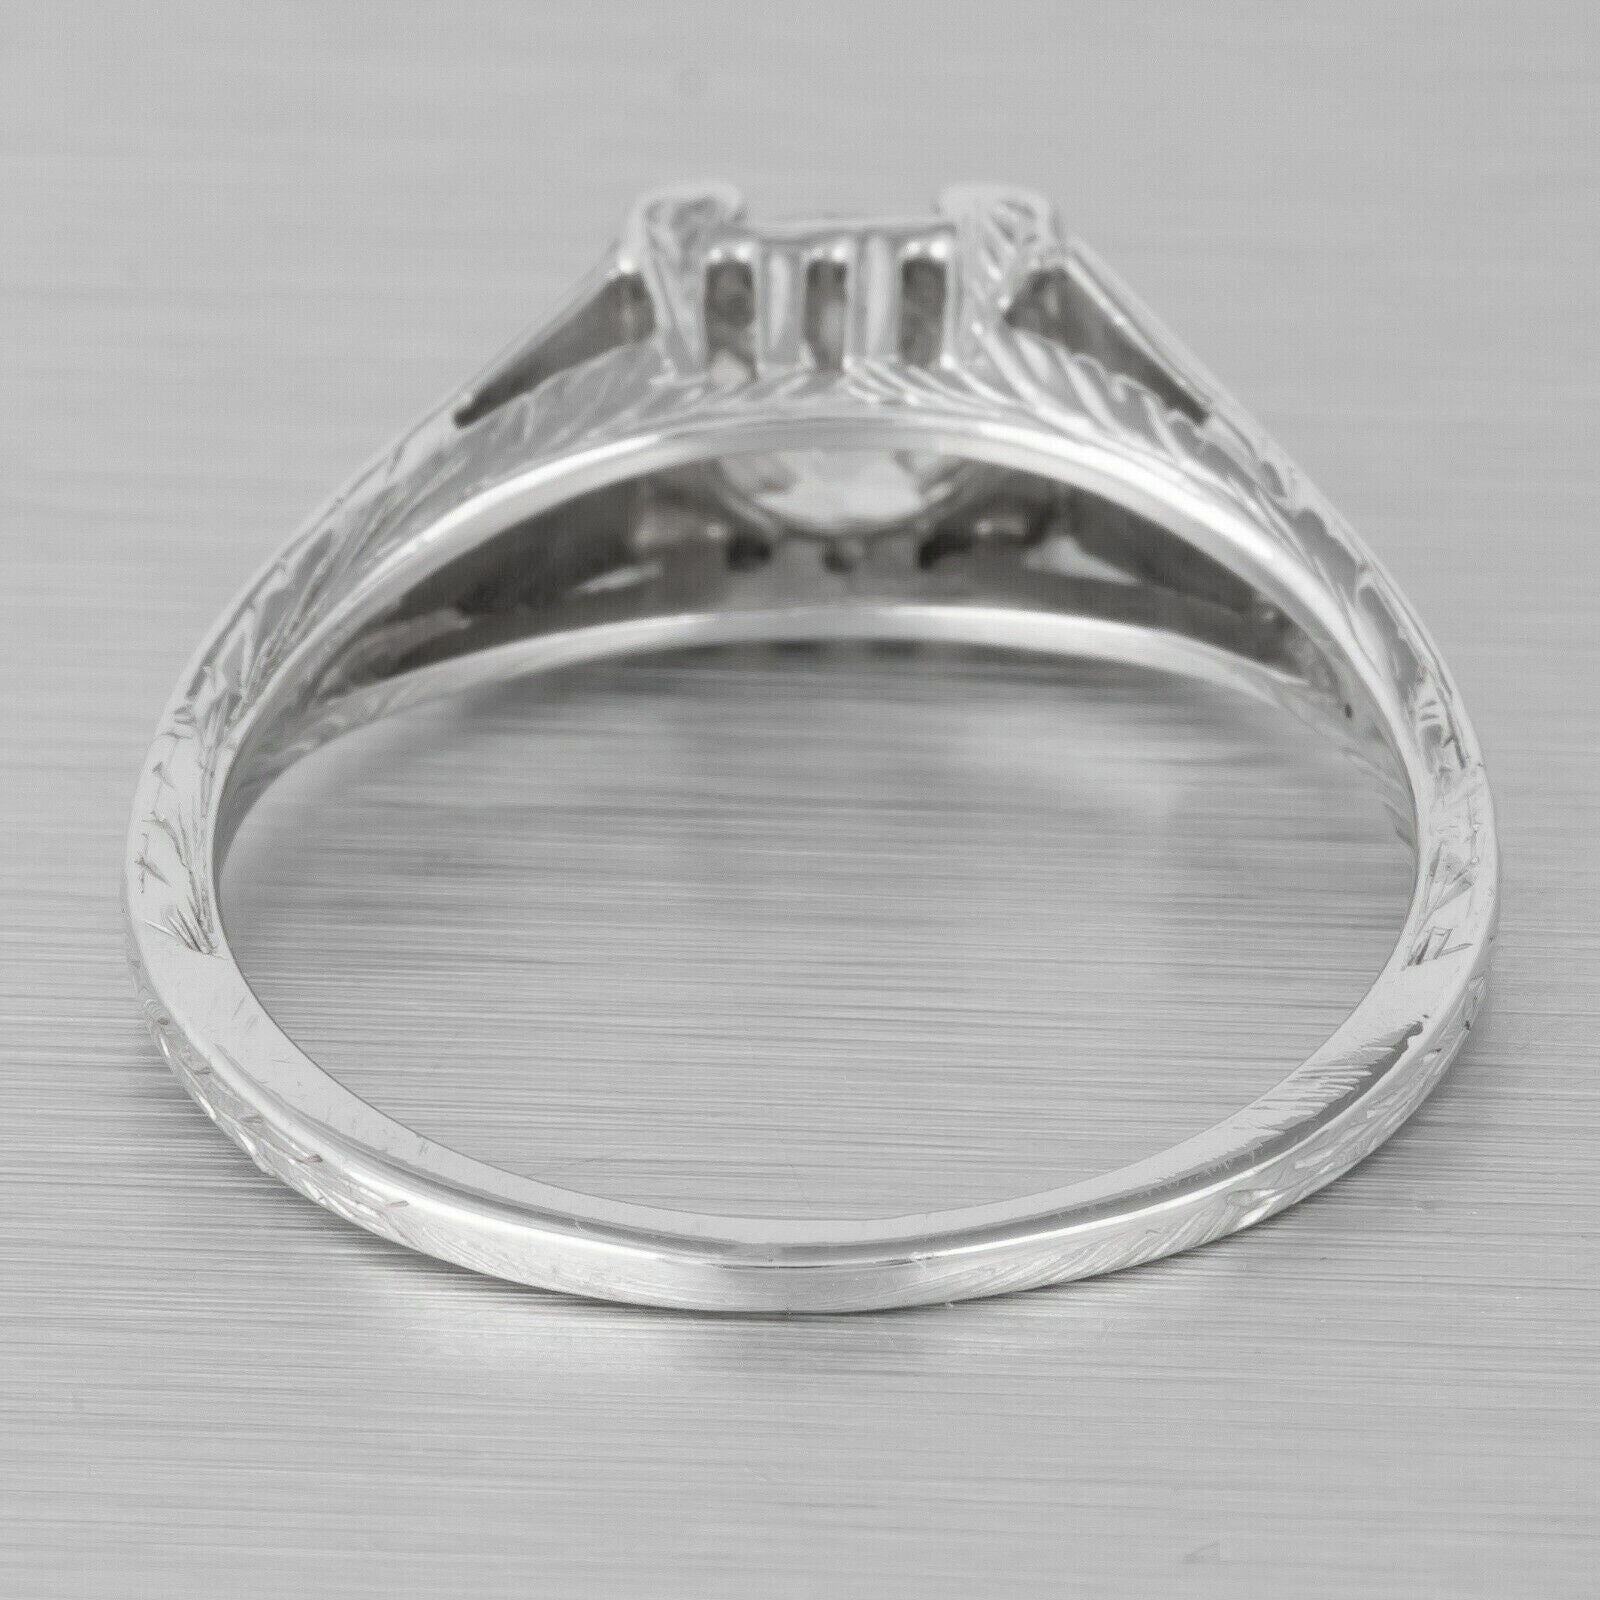 1930's Antique Art Deco 18k White Gold Diamond Engagement Ring 0.76ctw